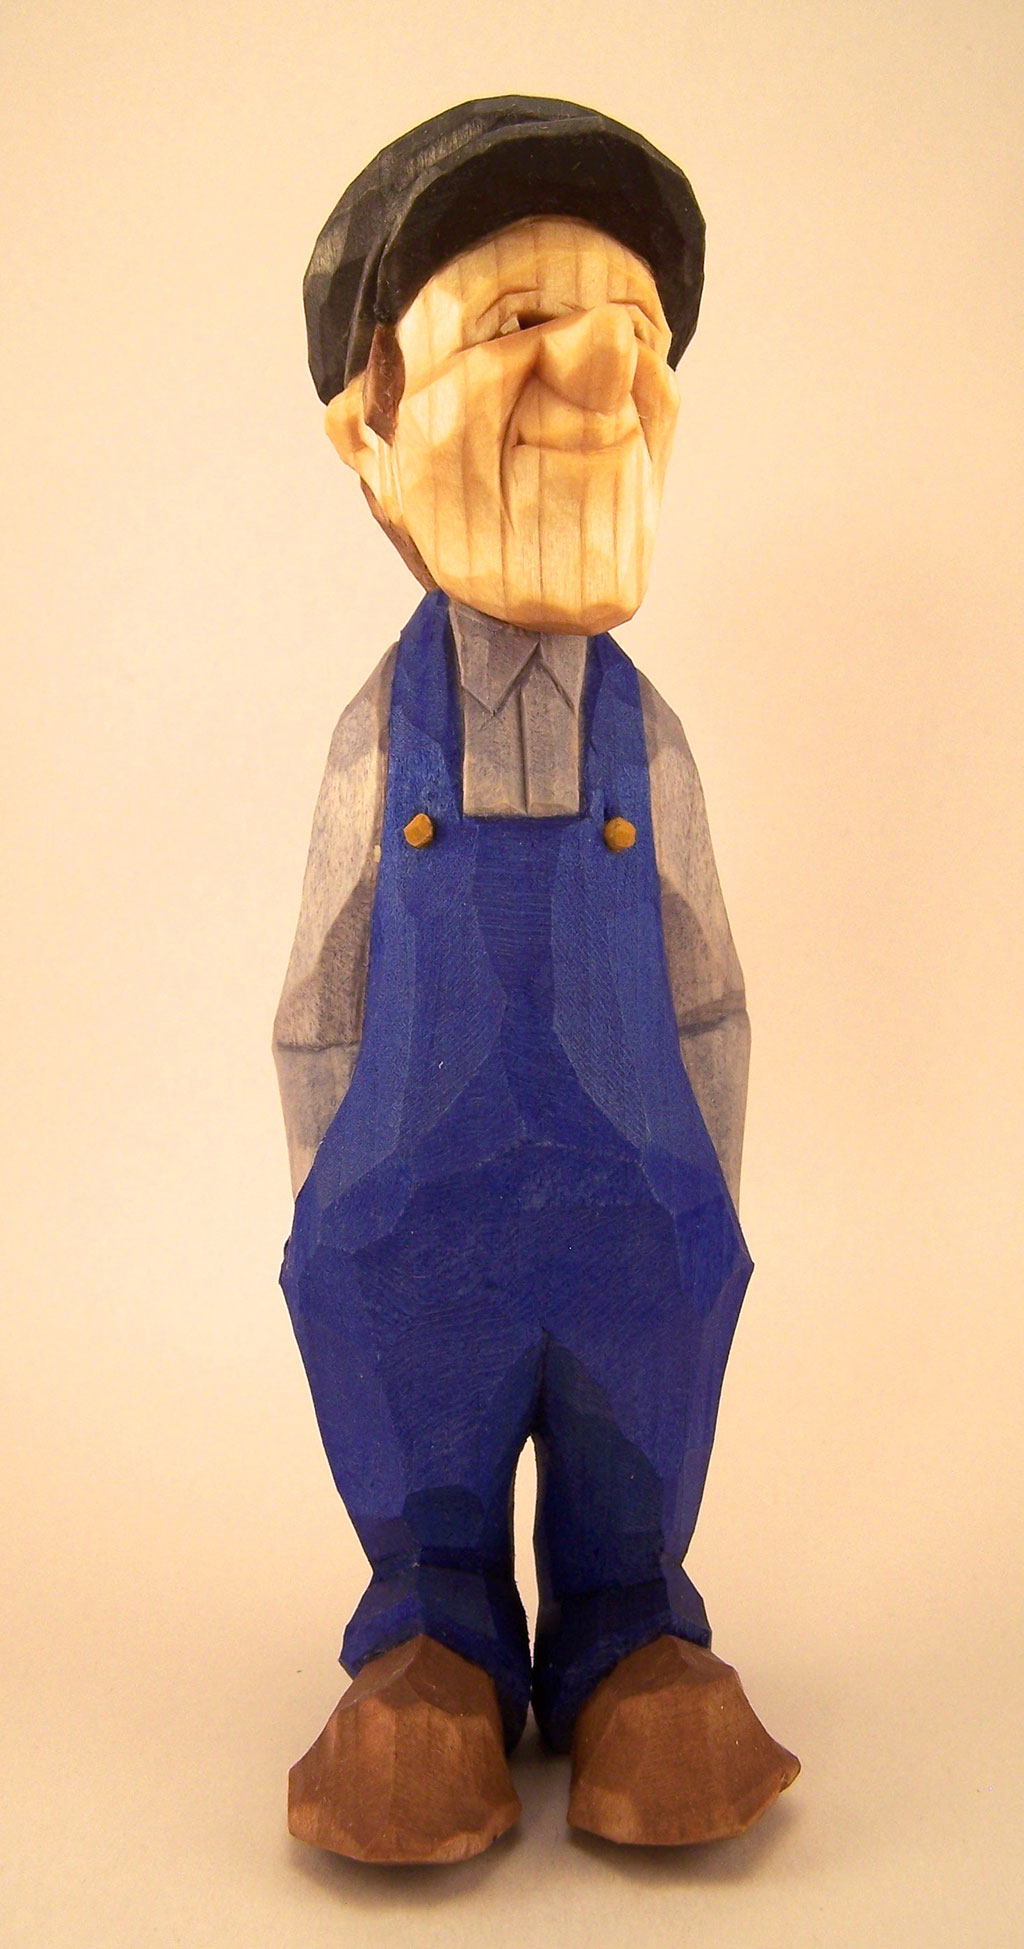 Harley Refsal, Farmhand, 2013, wood sculpture figurine